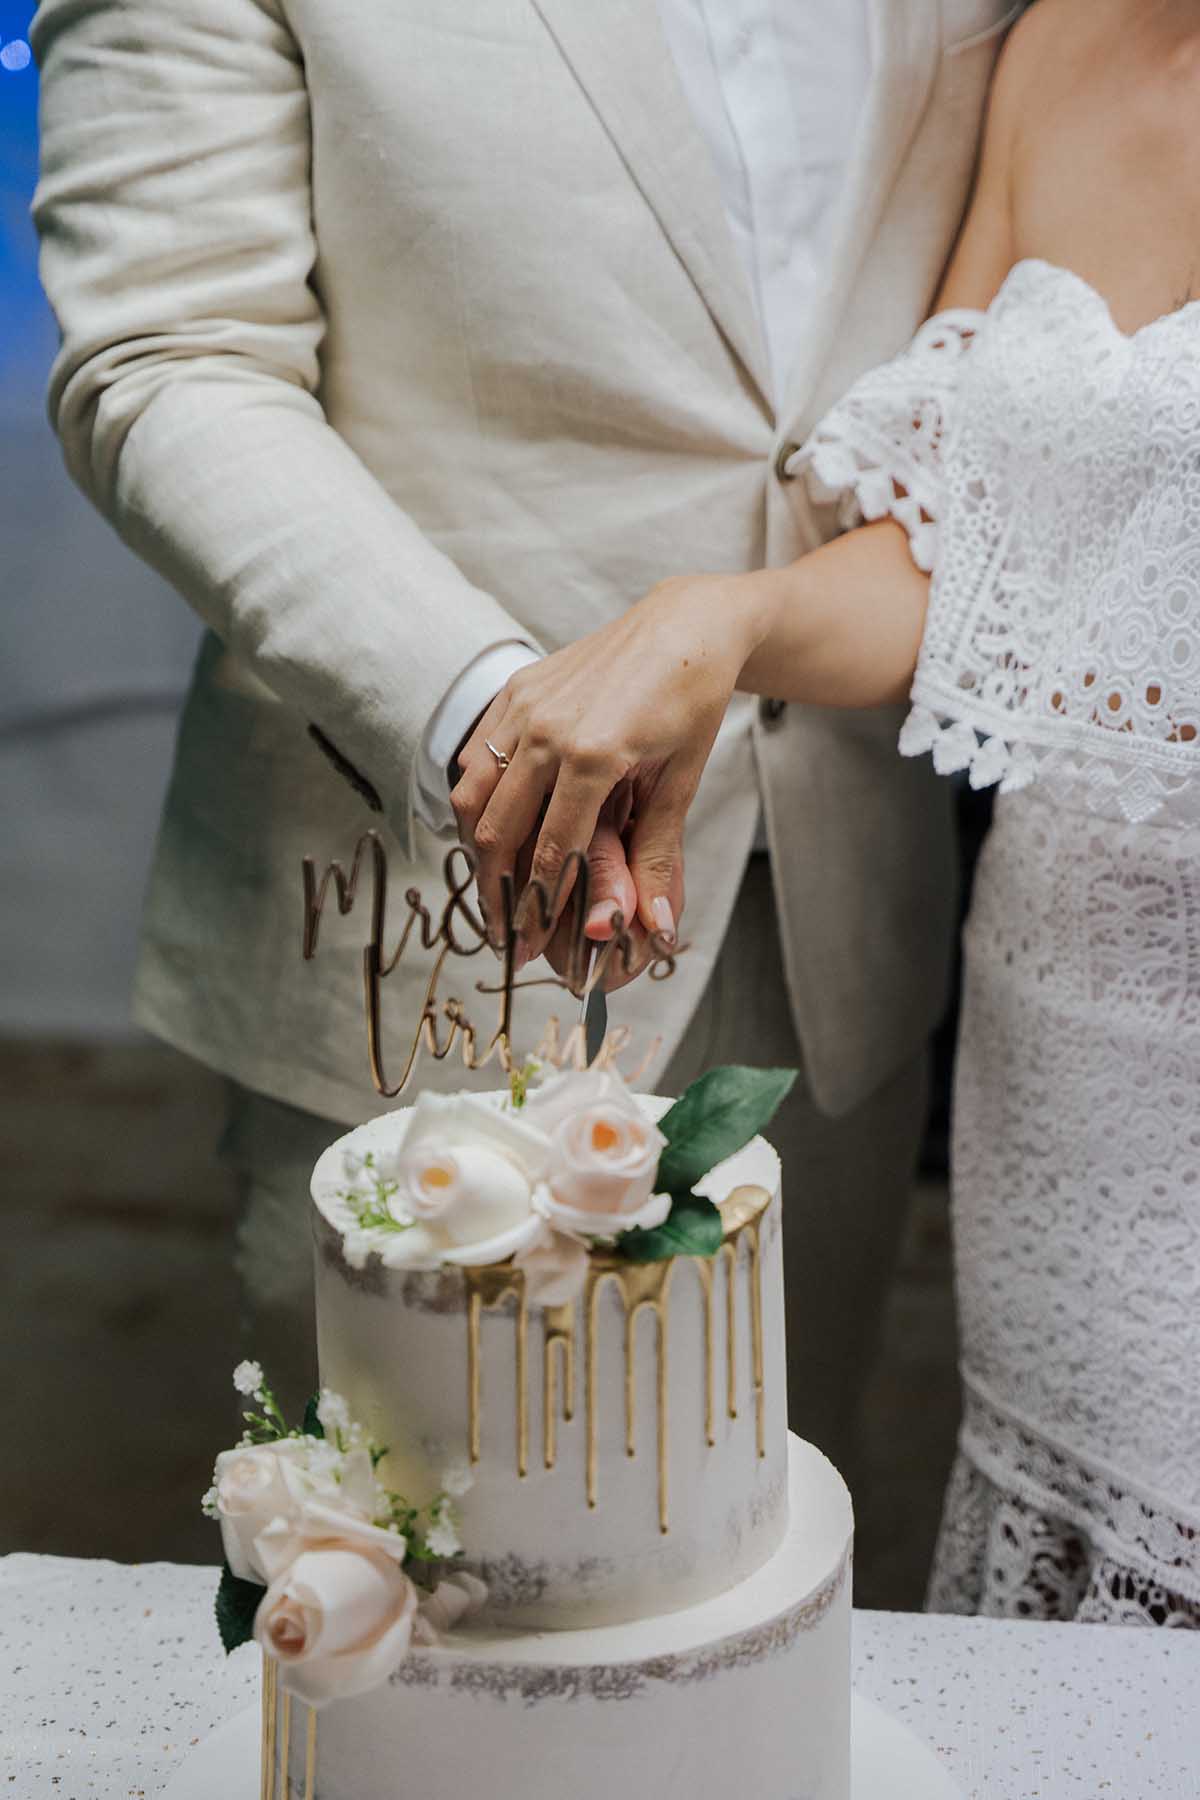 Wedding Photography - cutting the cake